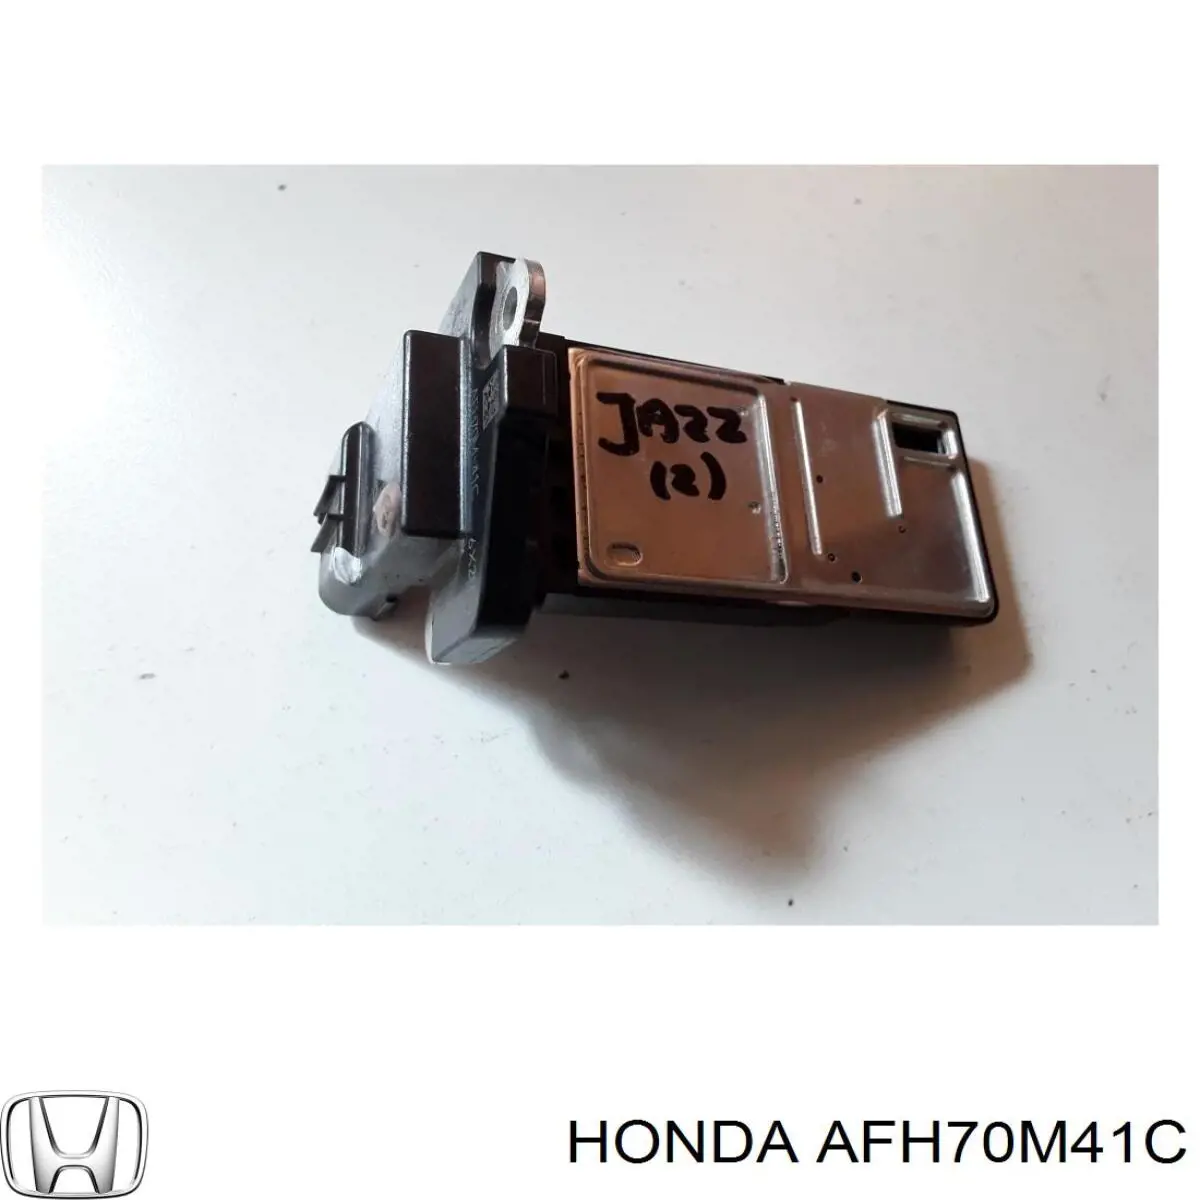 AFH70M41C Honda sensor de fluxo (consumo de ar, medidor de consumo M.A.F. - (Mass Airflow))